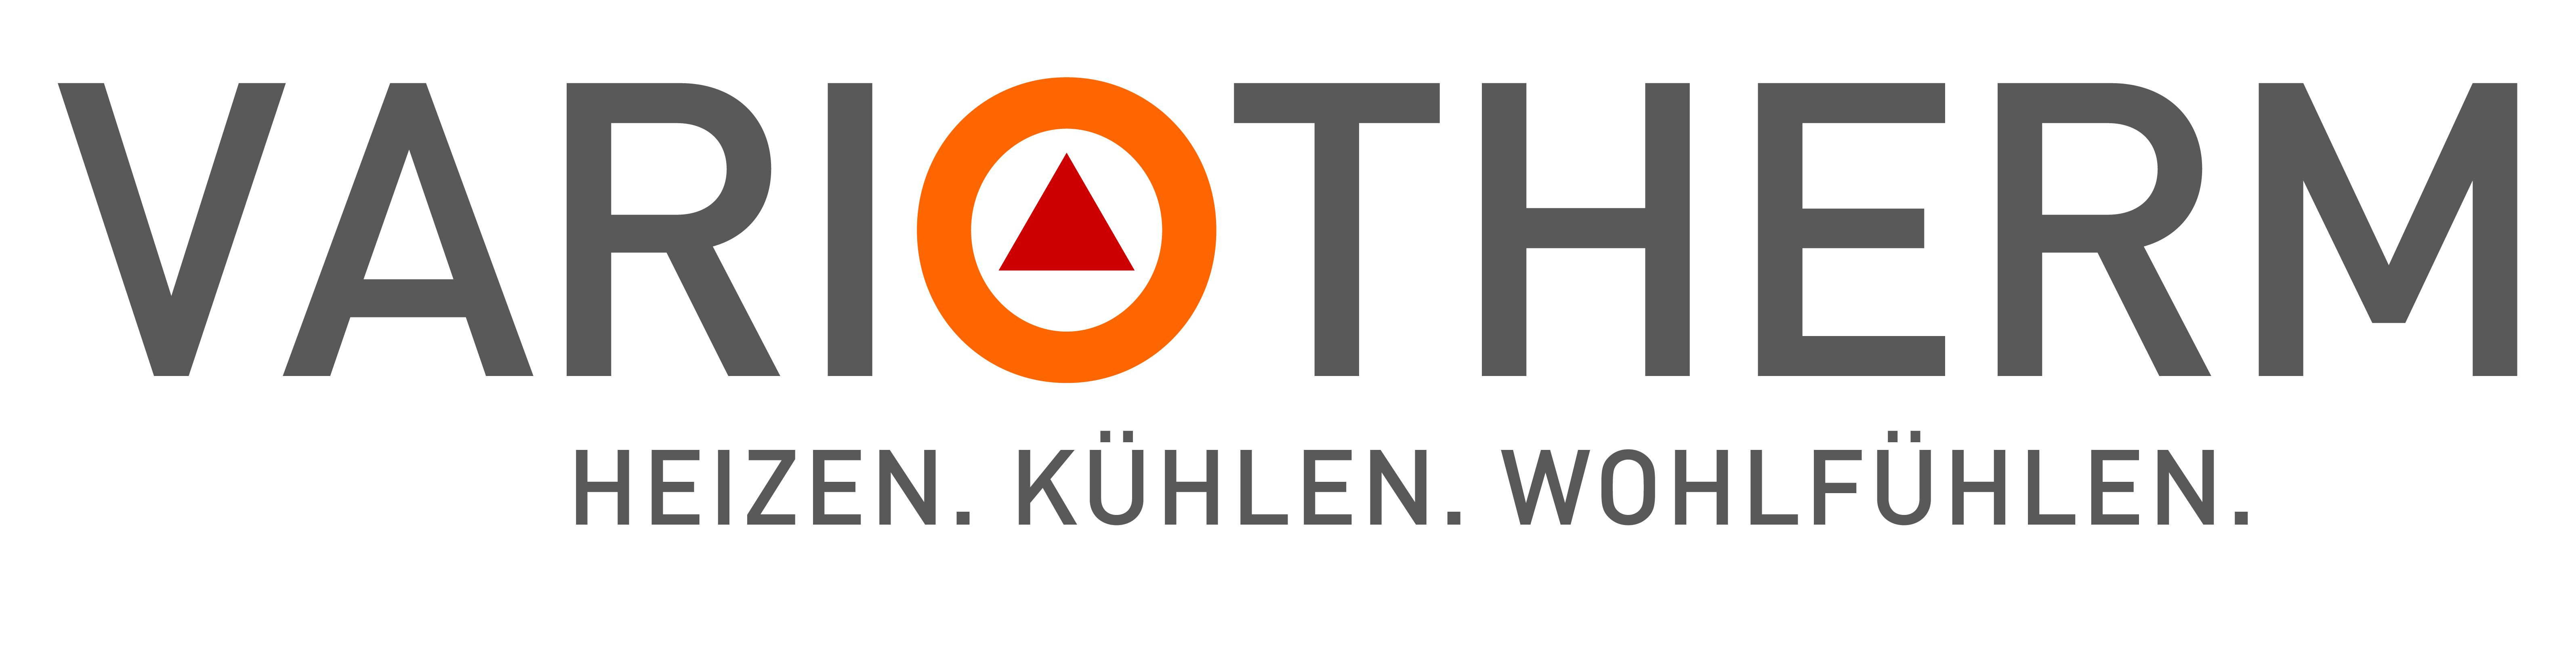 Variother_Logo